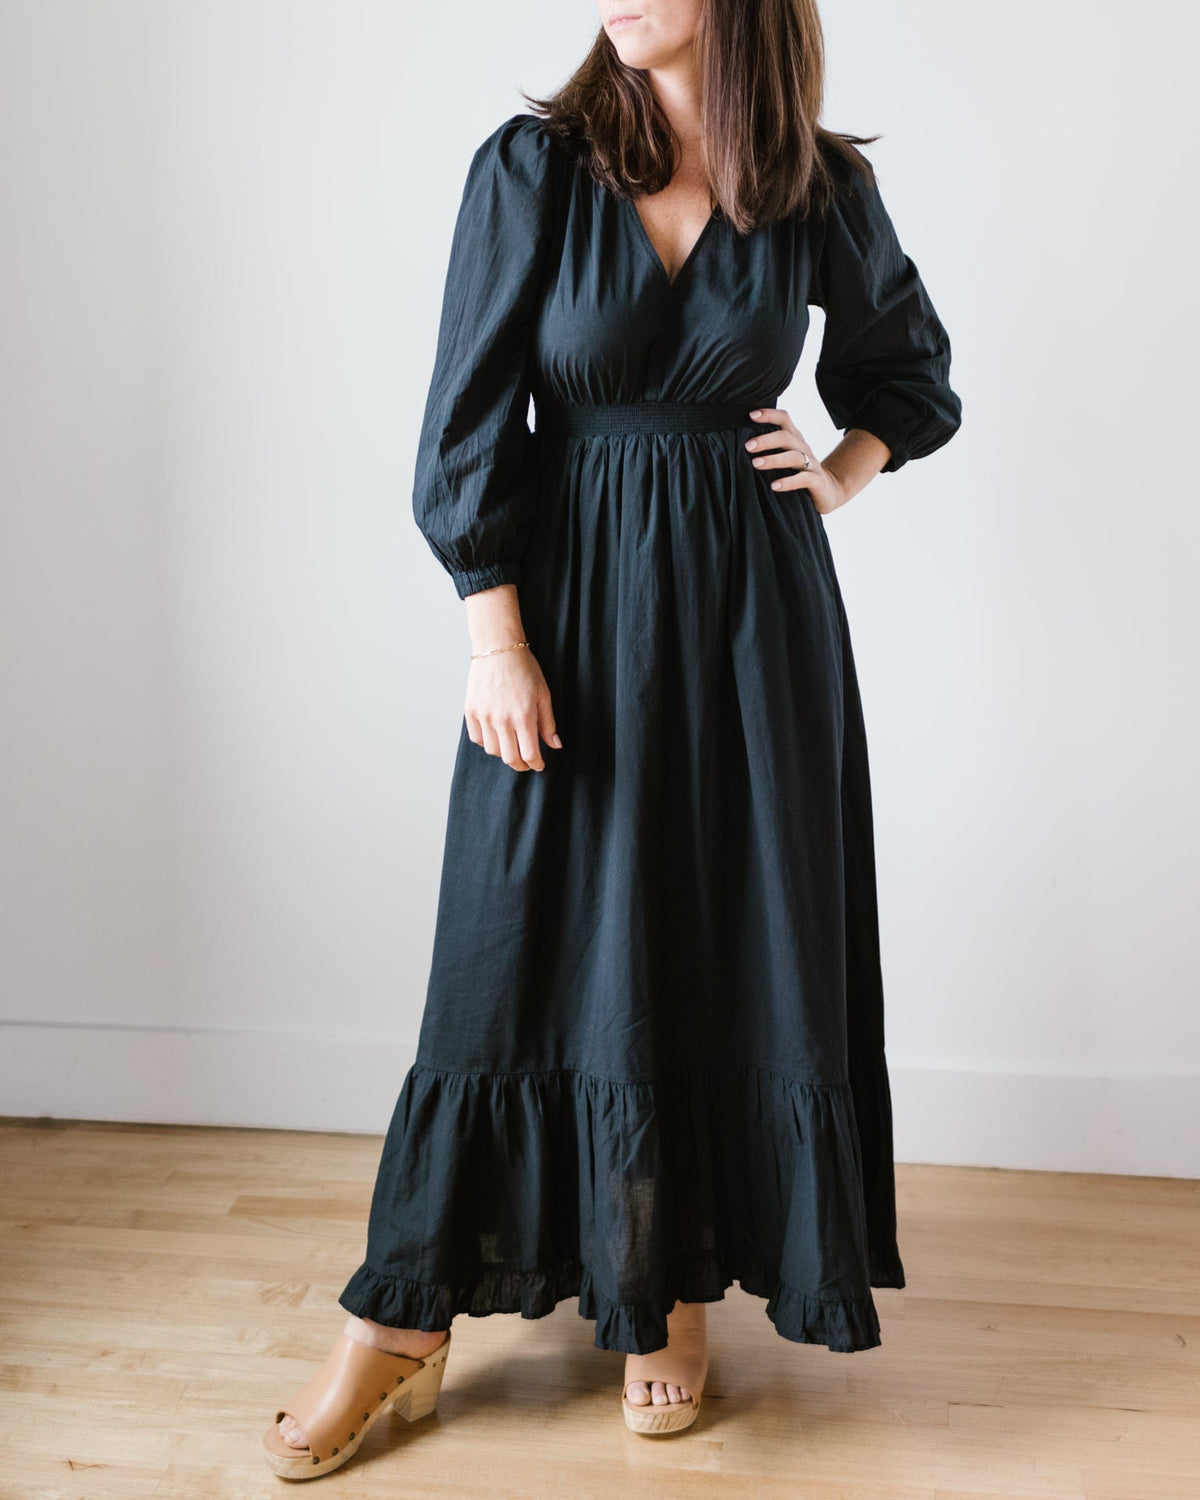 XiRENA Clothing Ashlyn Dress in Black